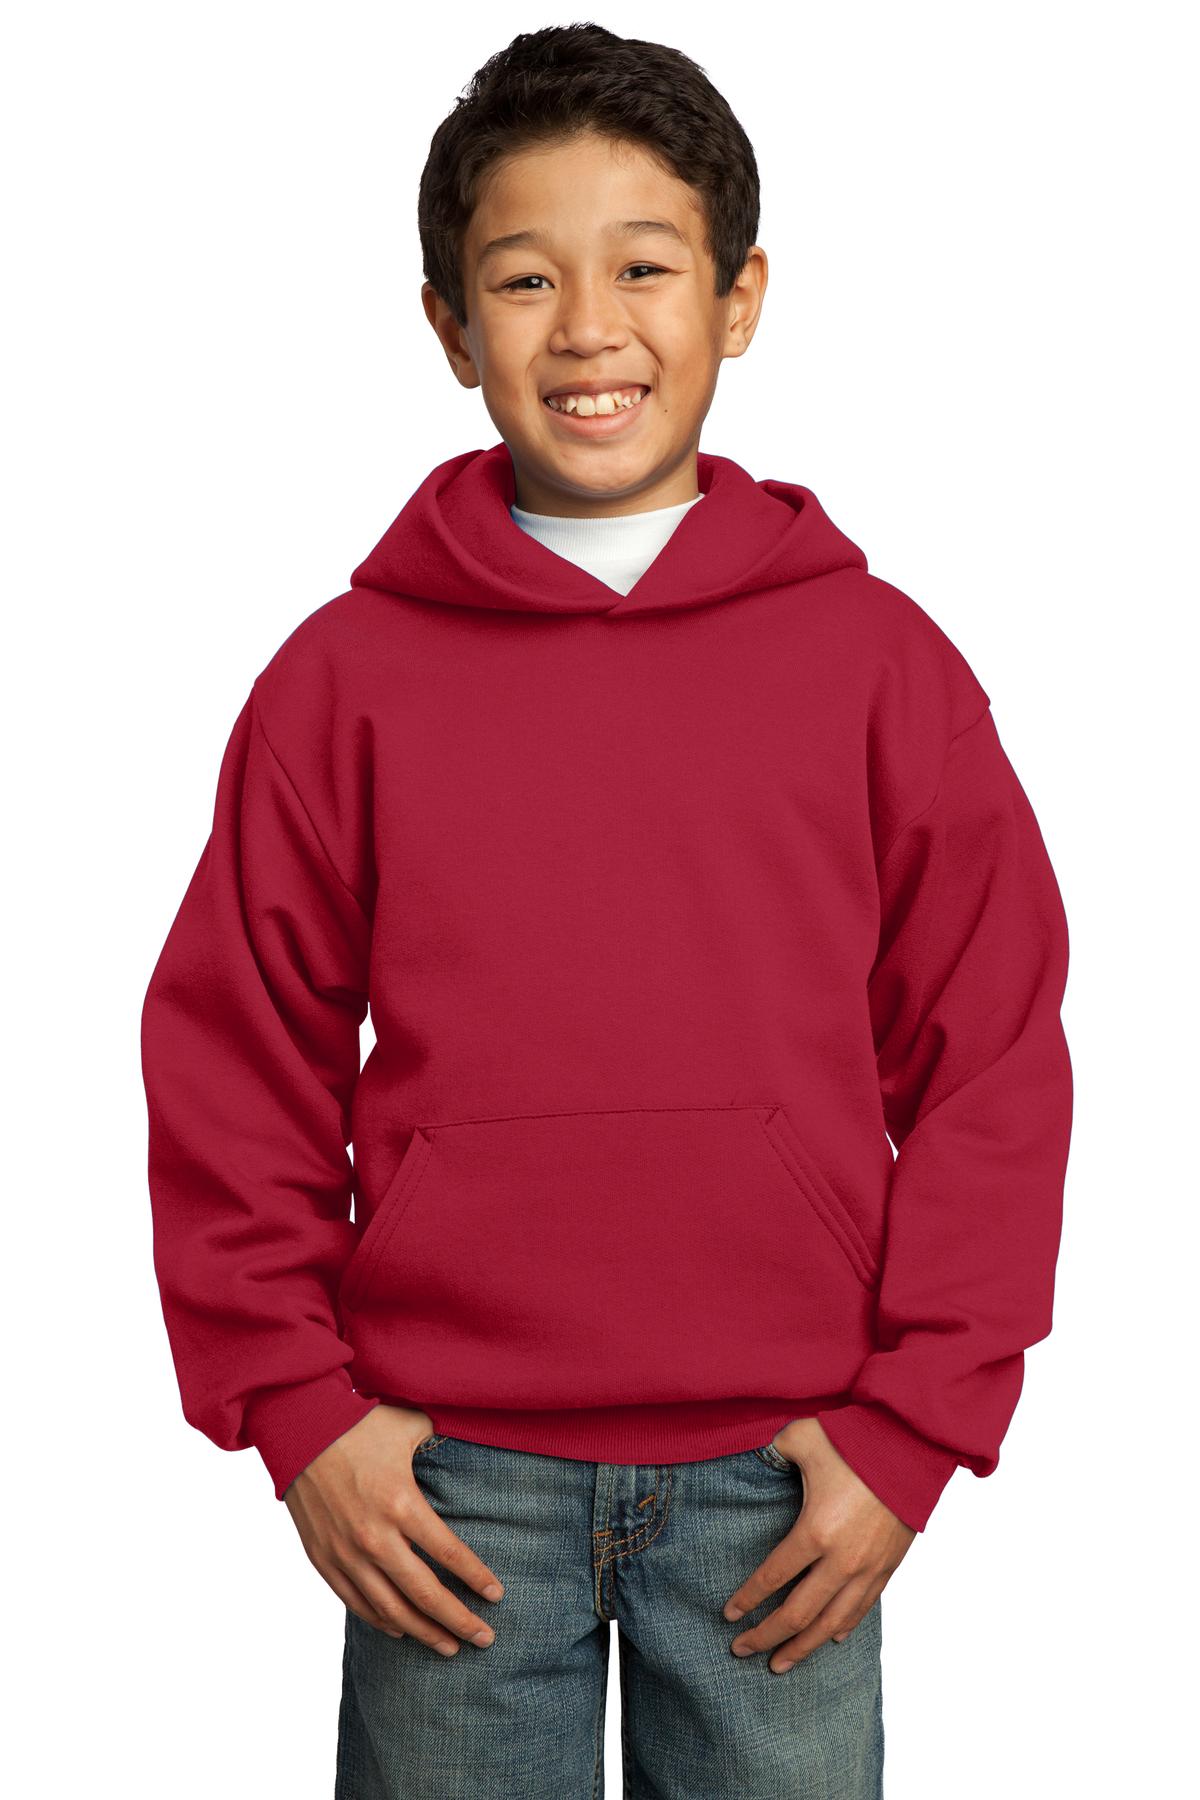 Next LevelPort & Company® - Youth Core Fleece Pullover Hooded Sweatshirt.  PC90YH